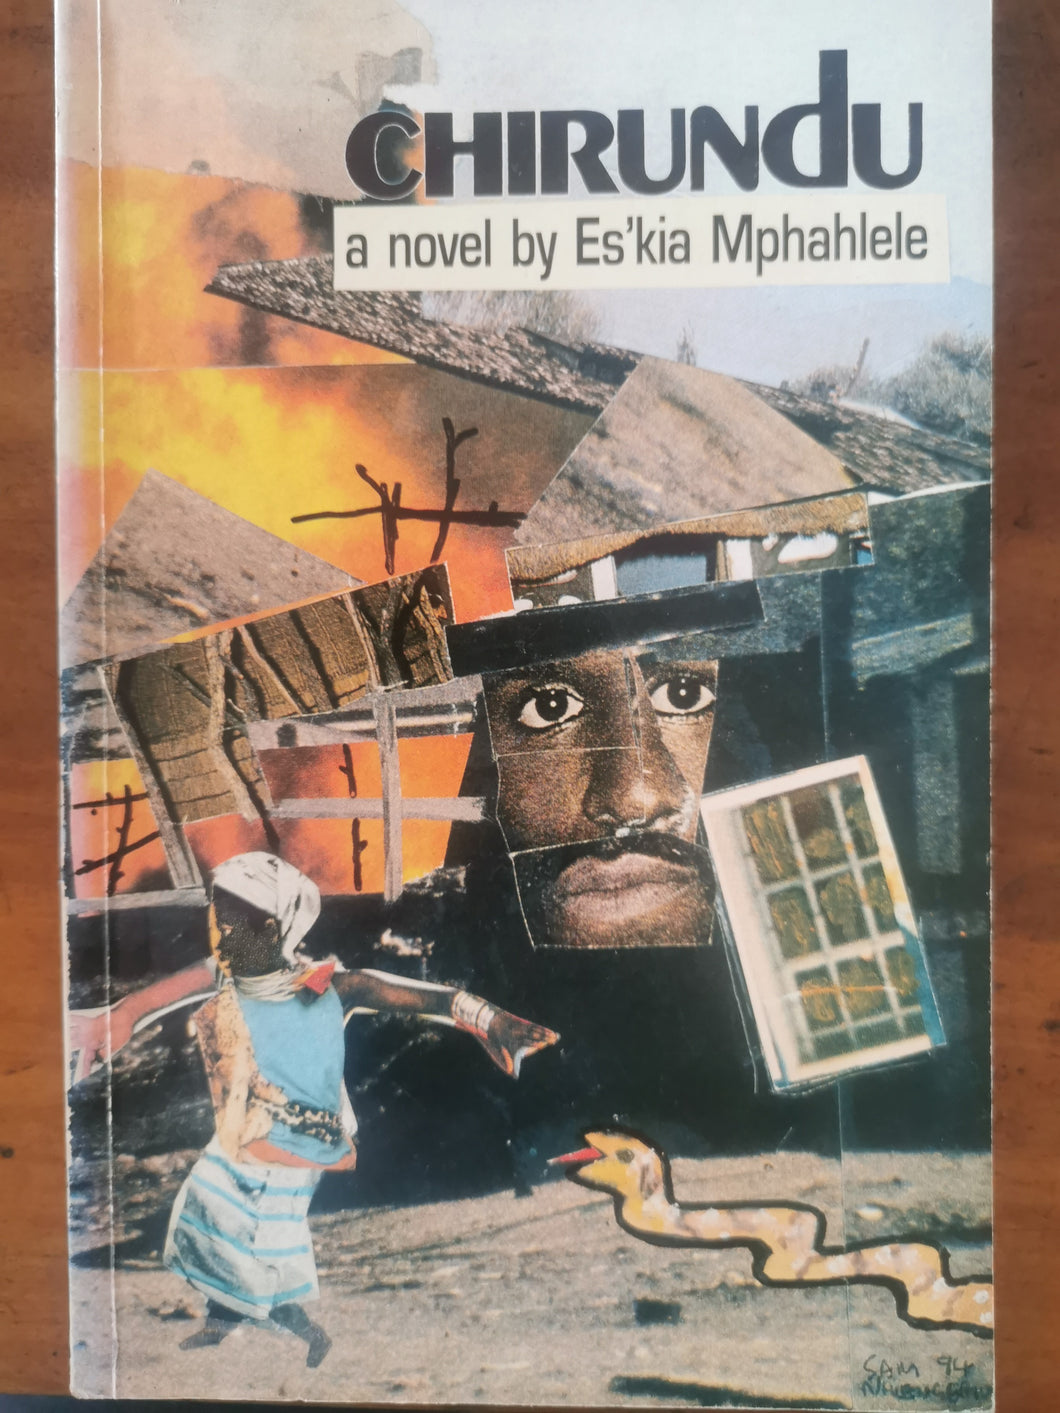 Chirundu: A novel by Es'kia Mphahlele